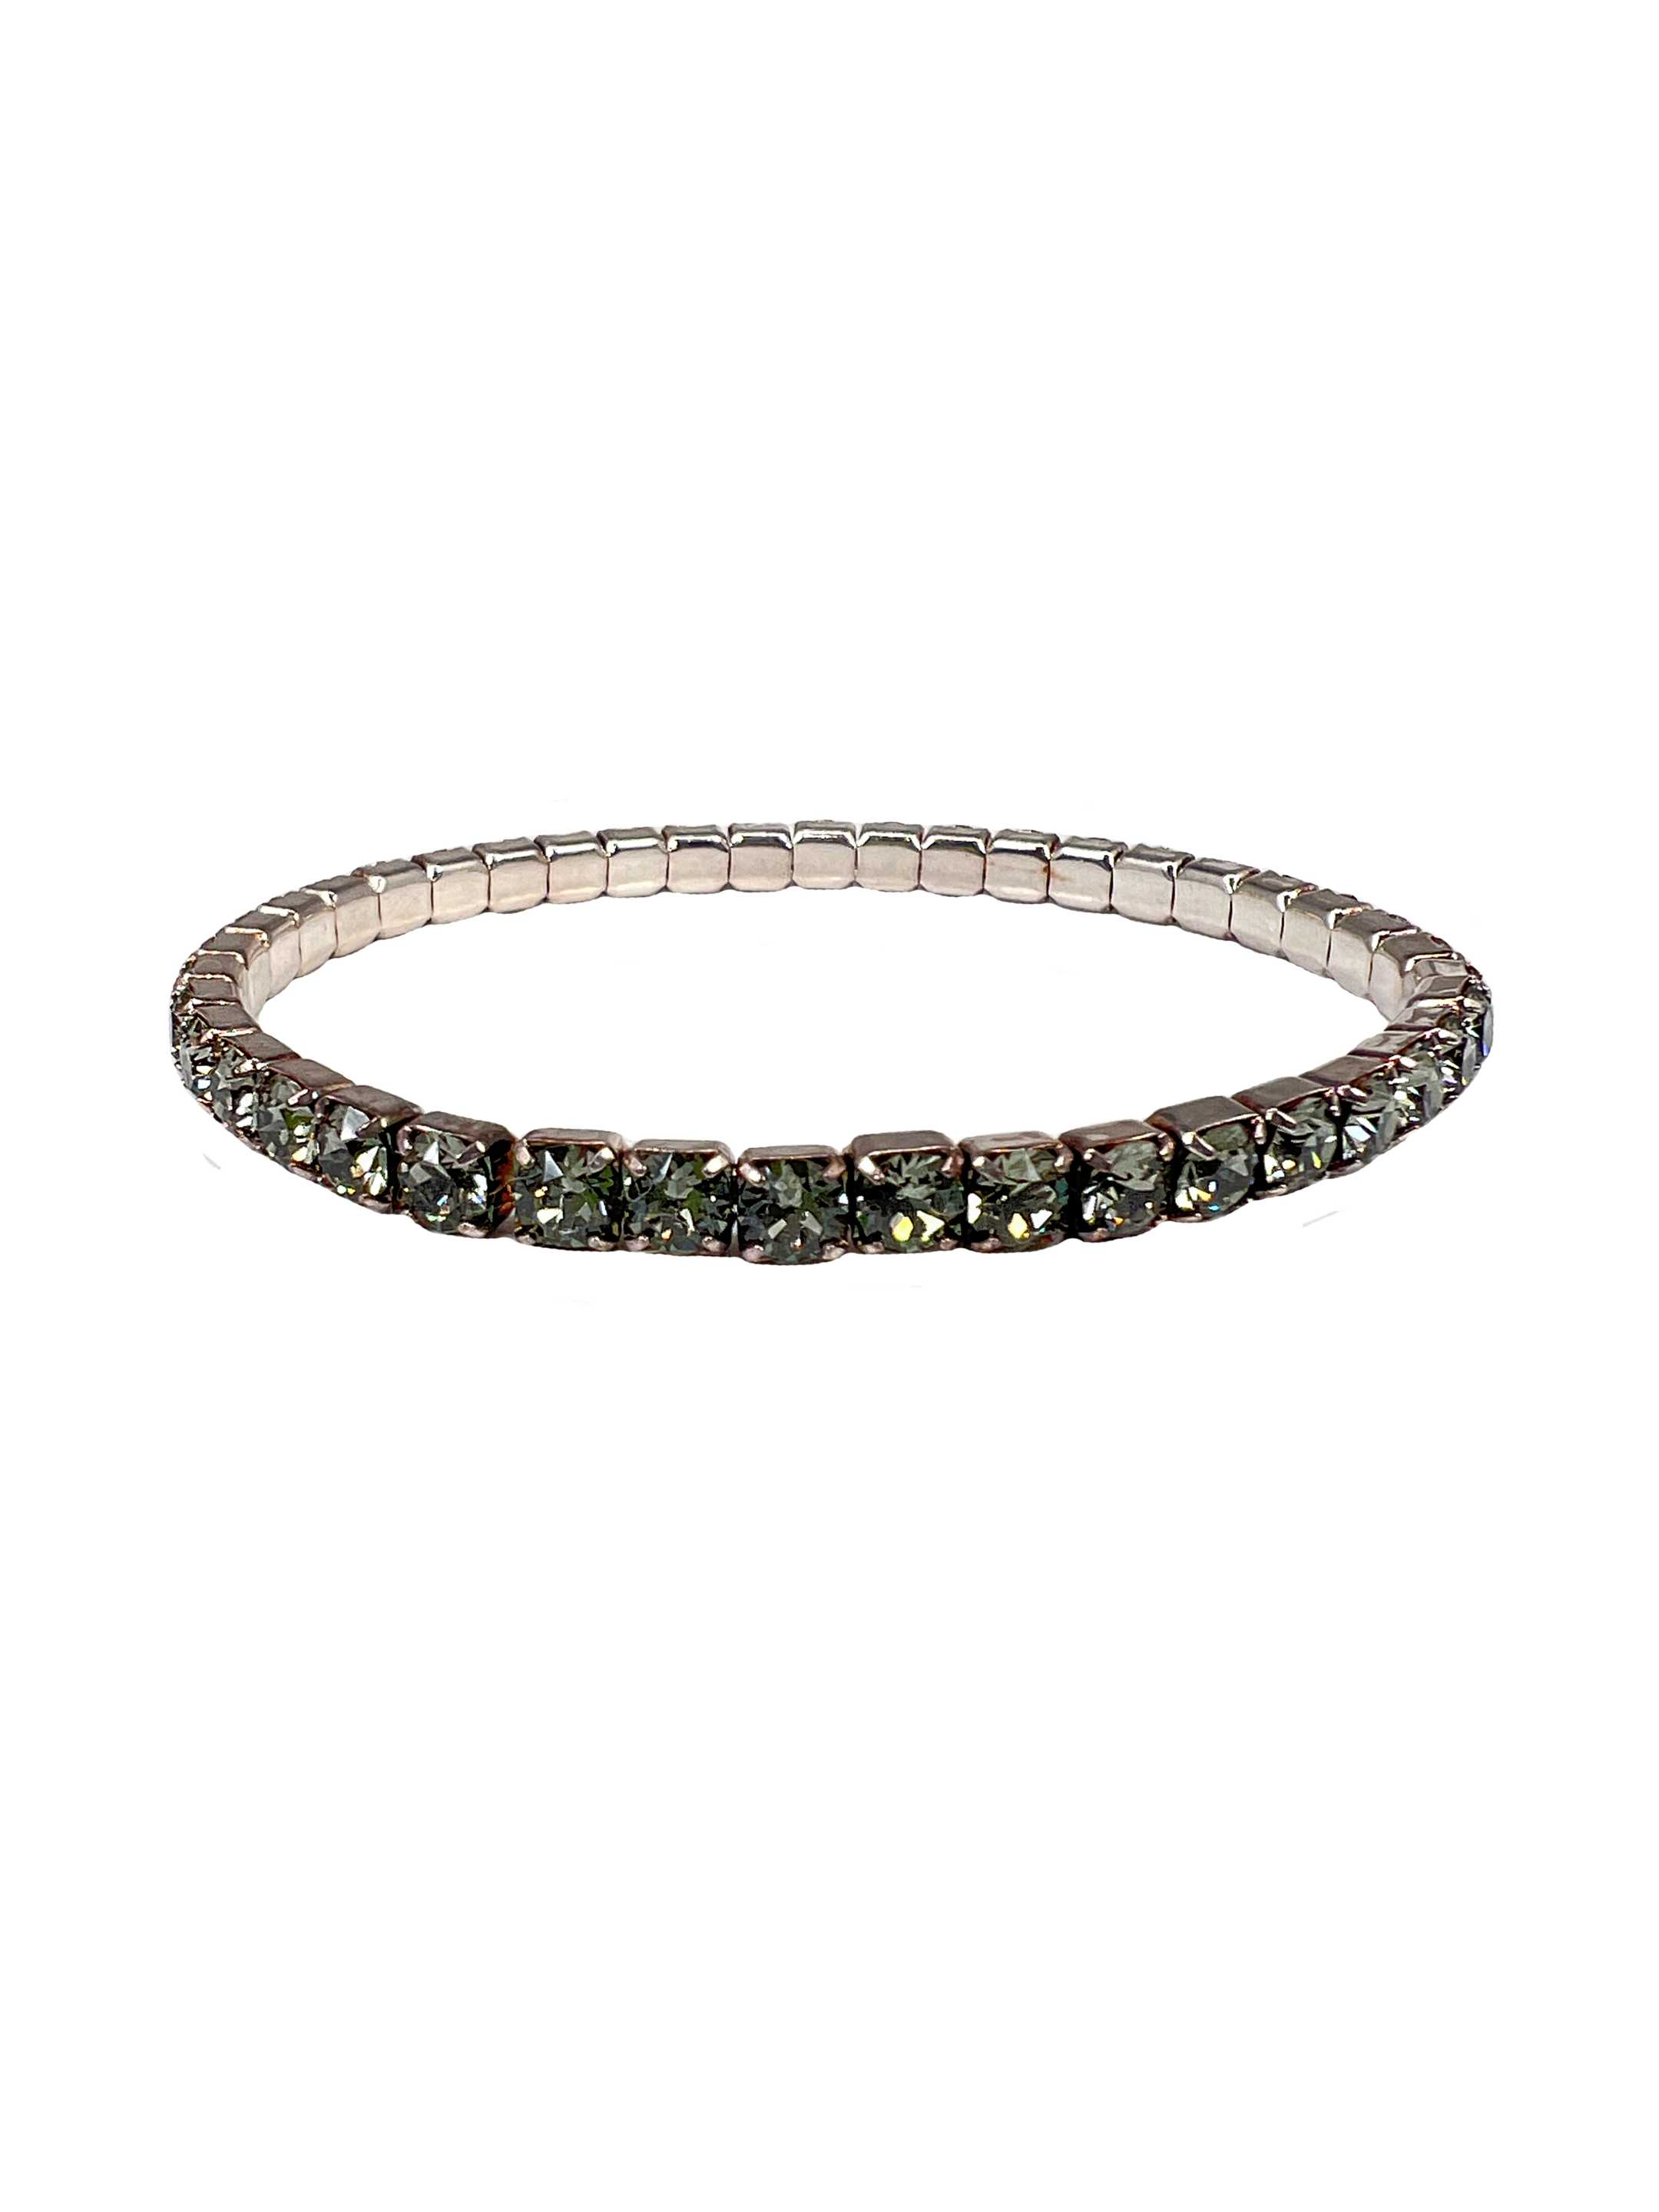 Silver bracelet with dark green crystals